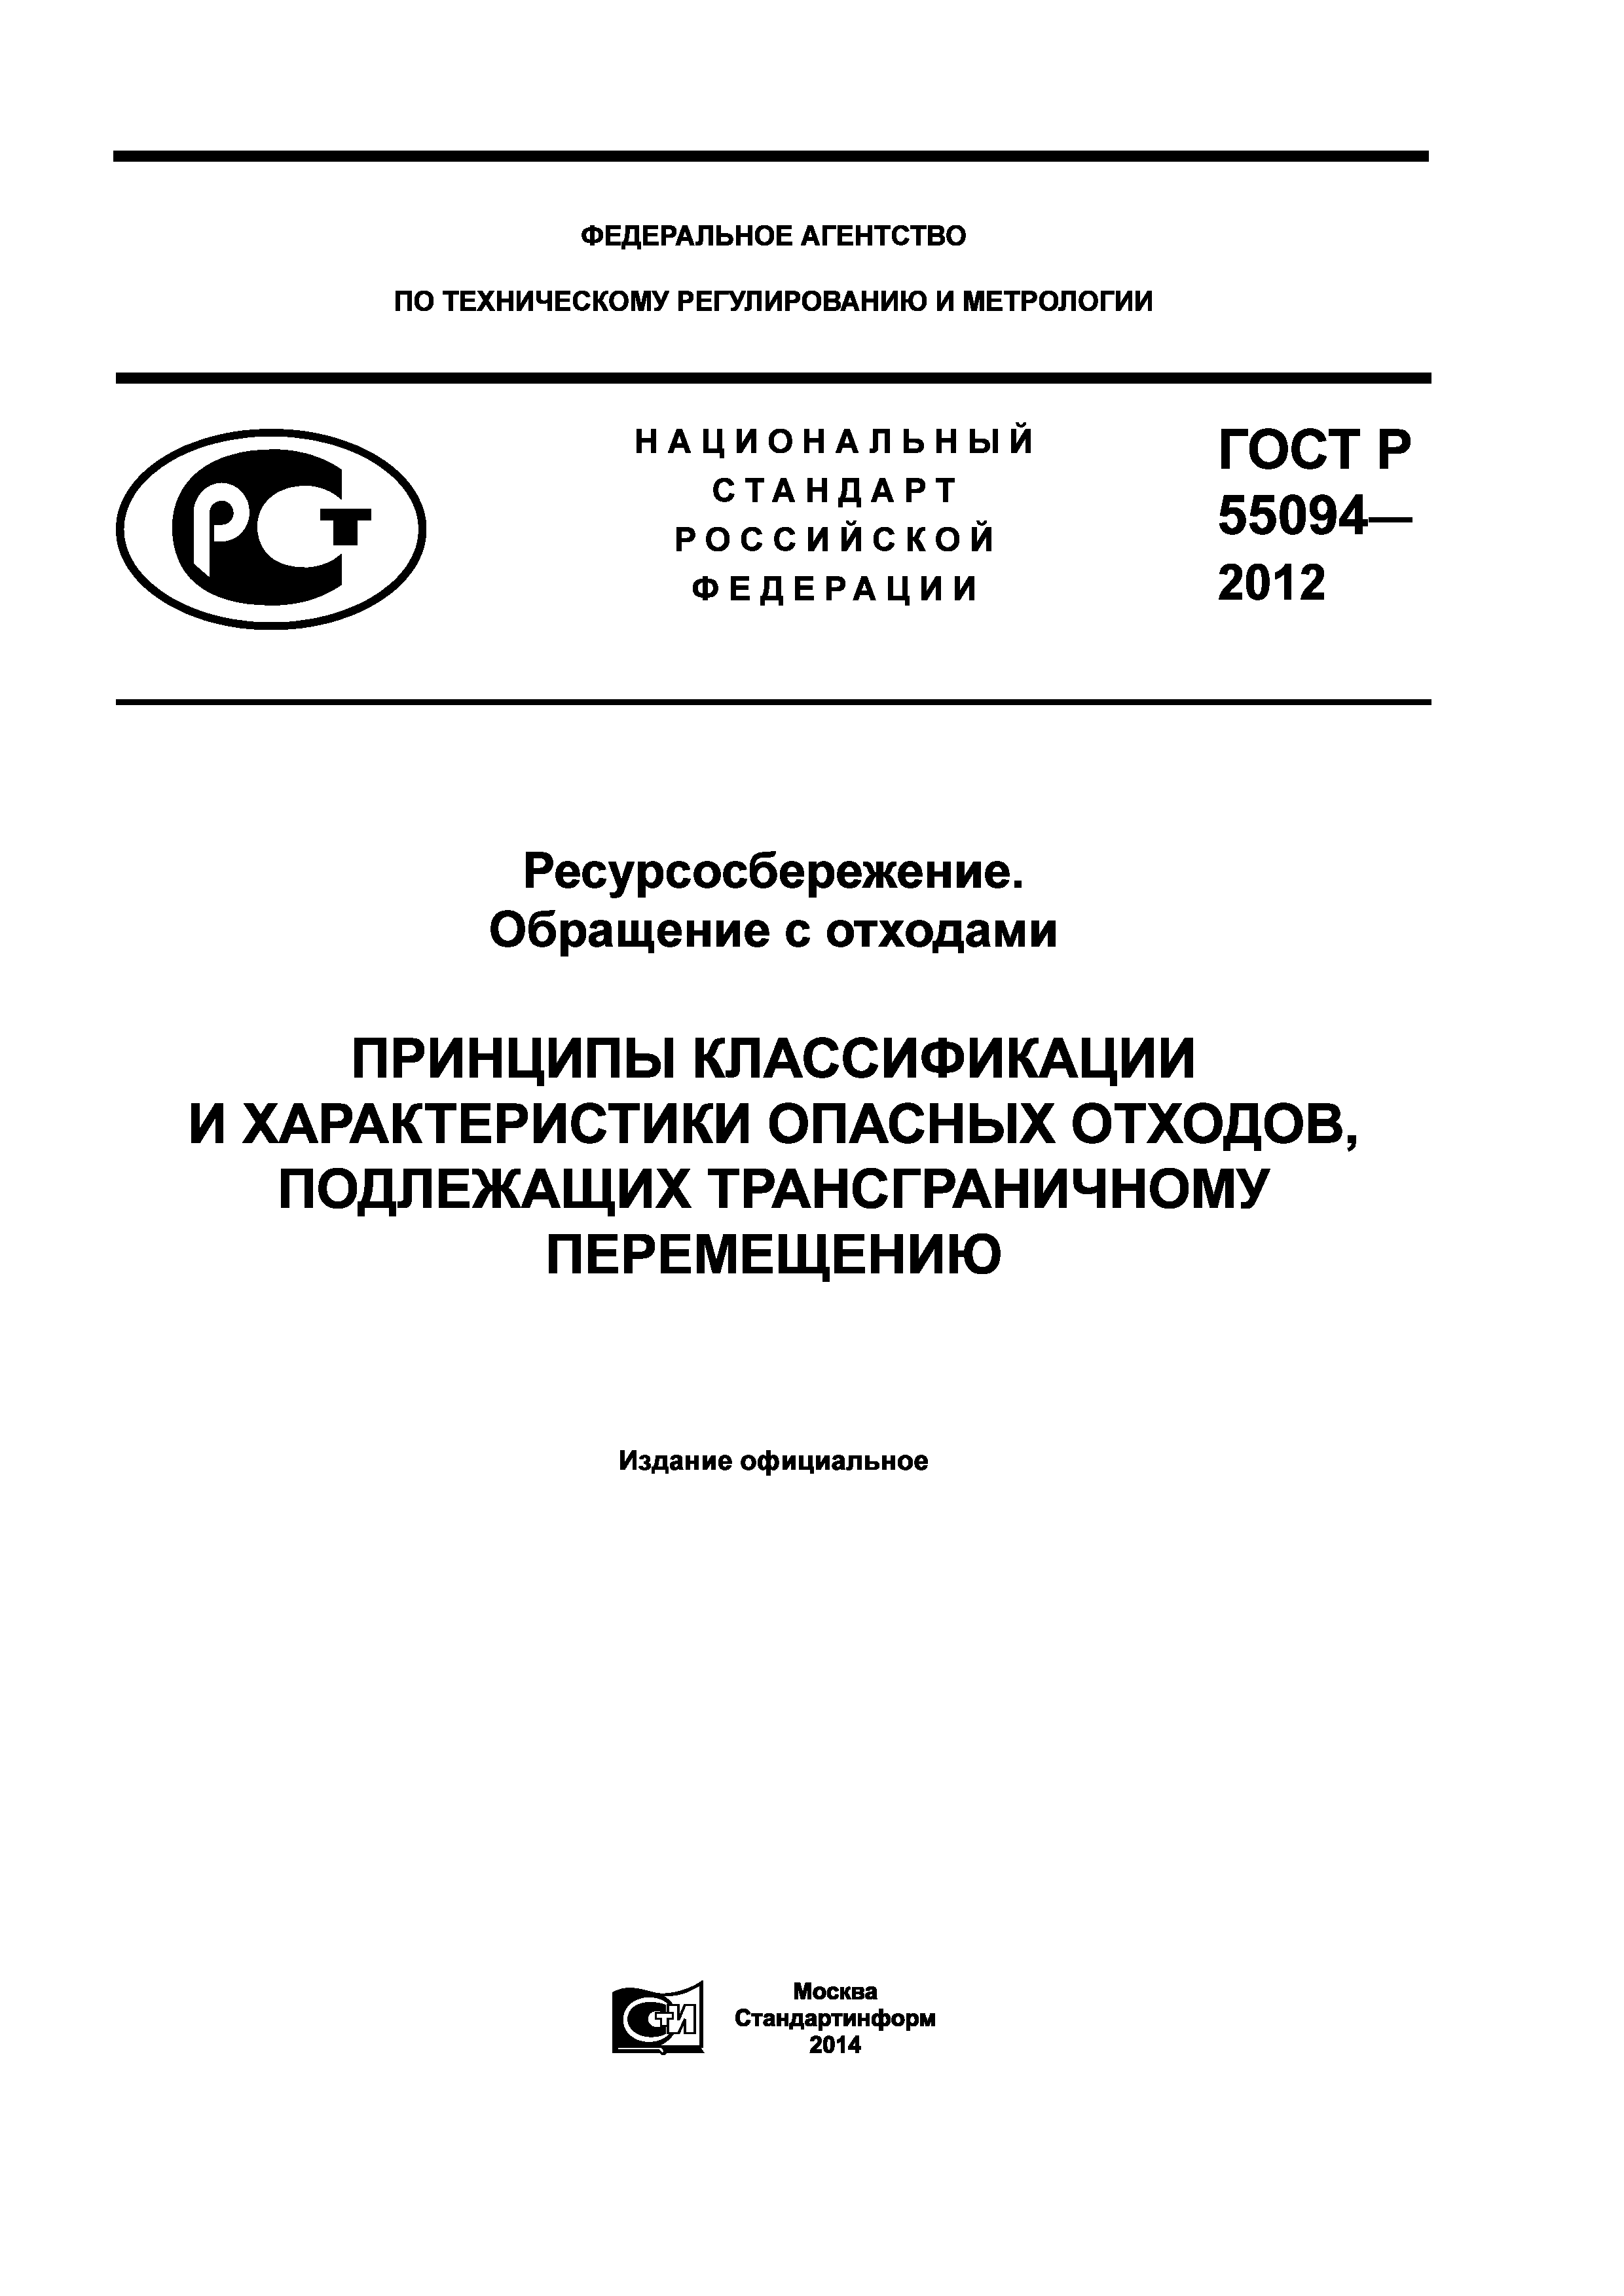 ГОСТ Р 55094-2012